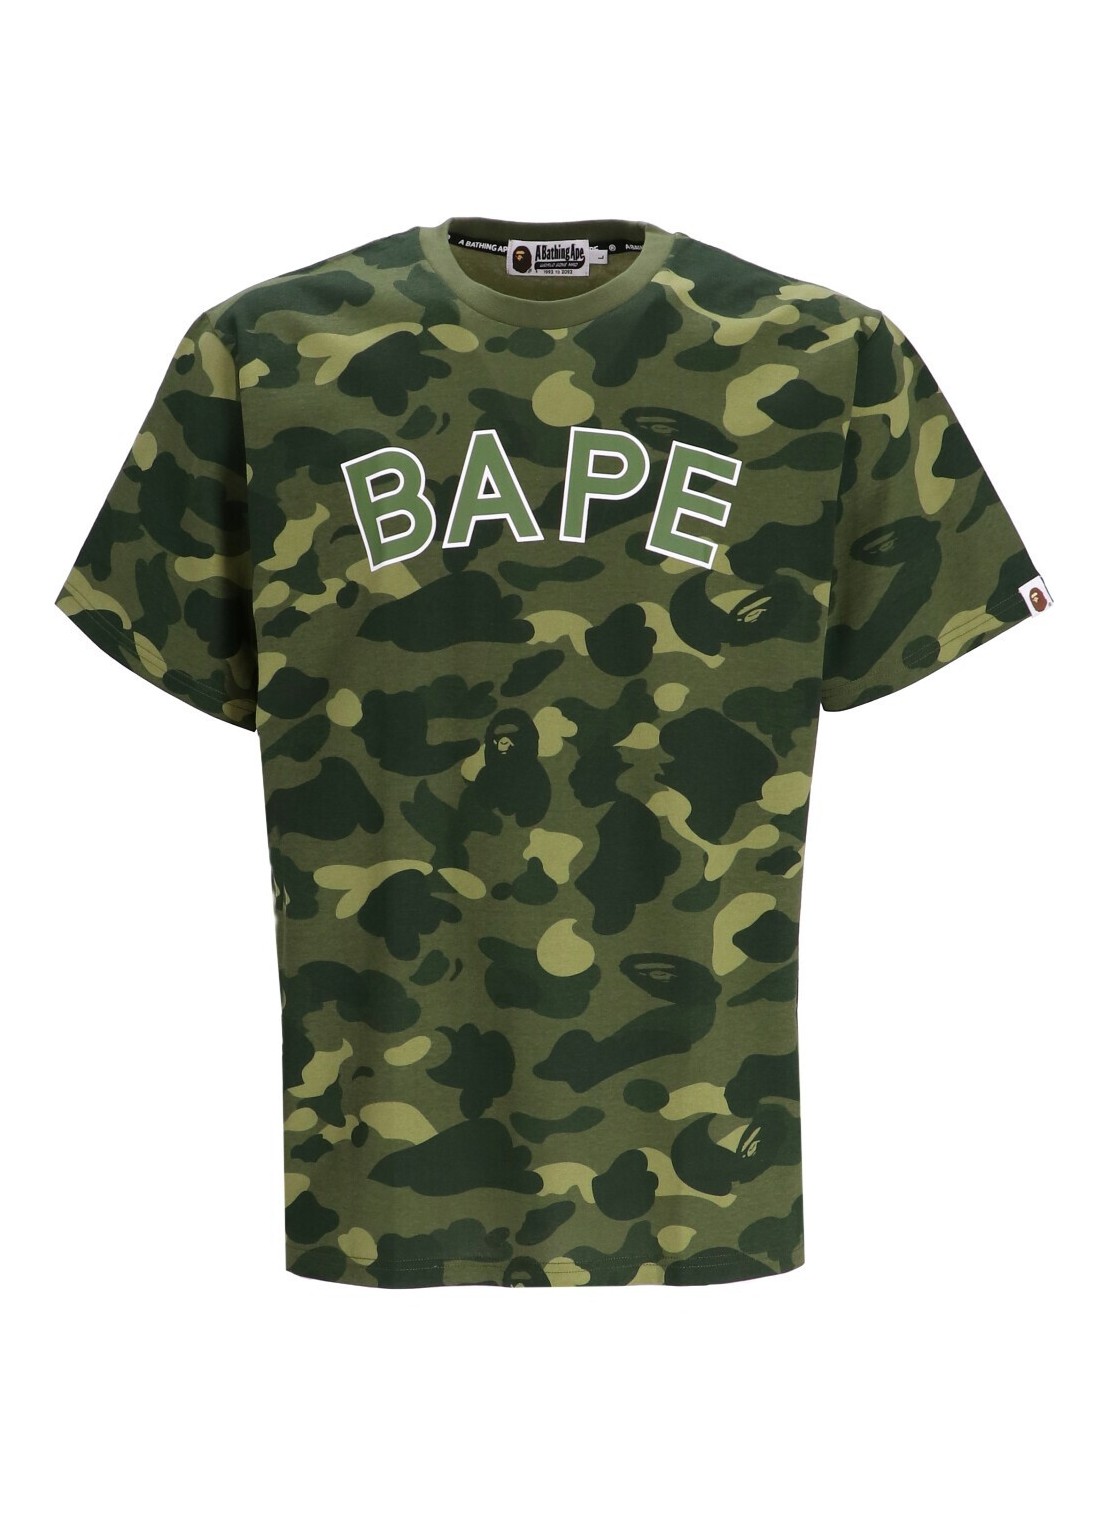 Camiseta bape t-shirt man color camo bape tee m 001csi801003m green talla XXL
 